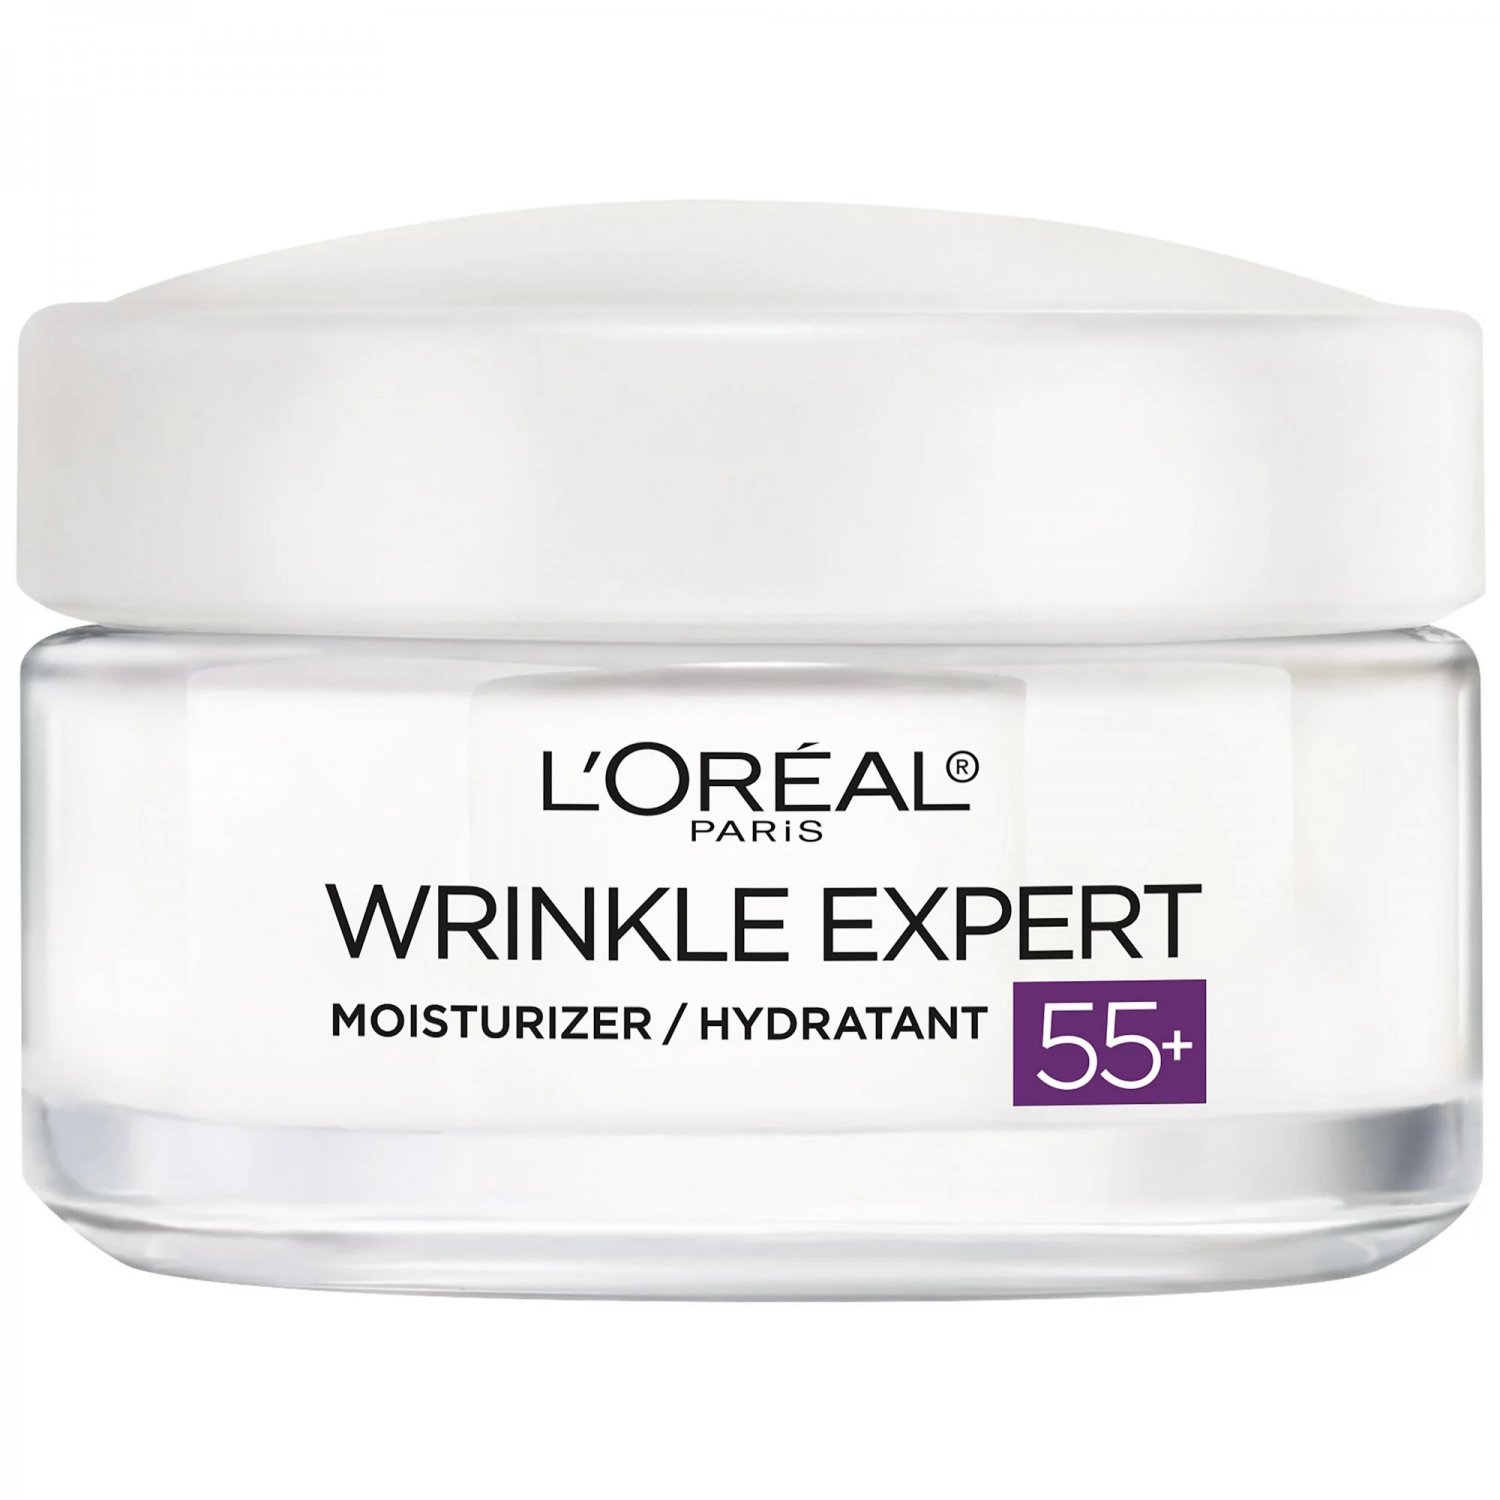 L'Oreal Paris Wrinkle Expert, 55+ Moisturizer Anti-Aging Face Moisturizer, 1.7 oz